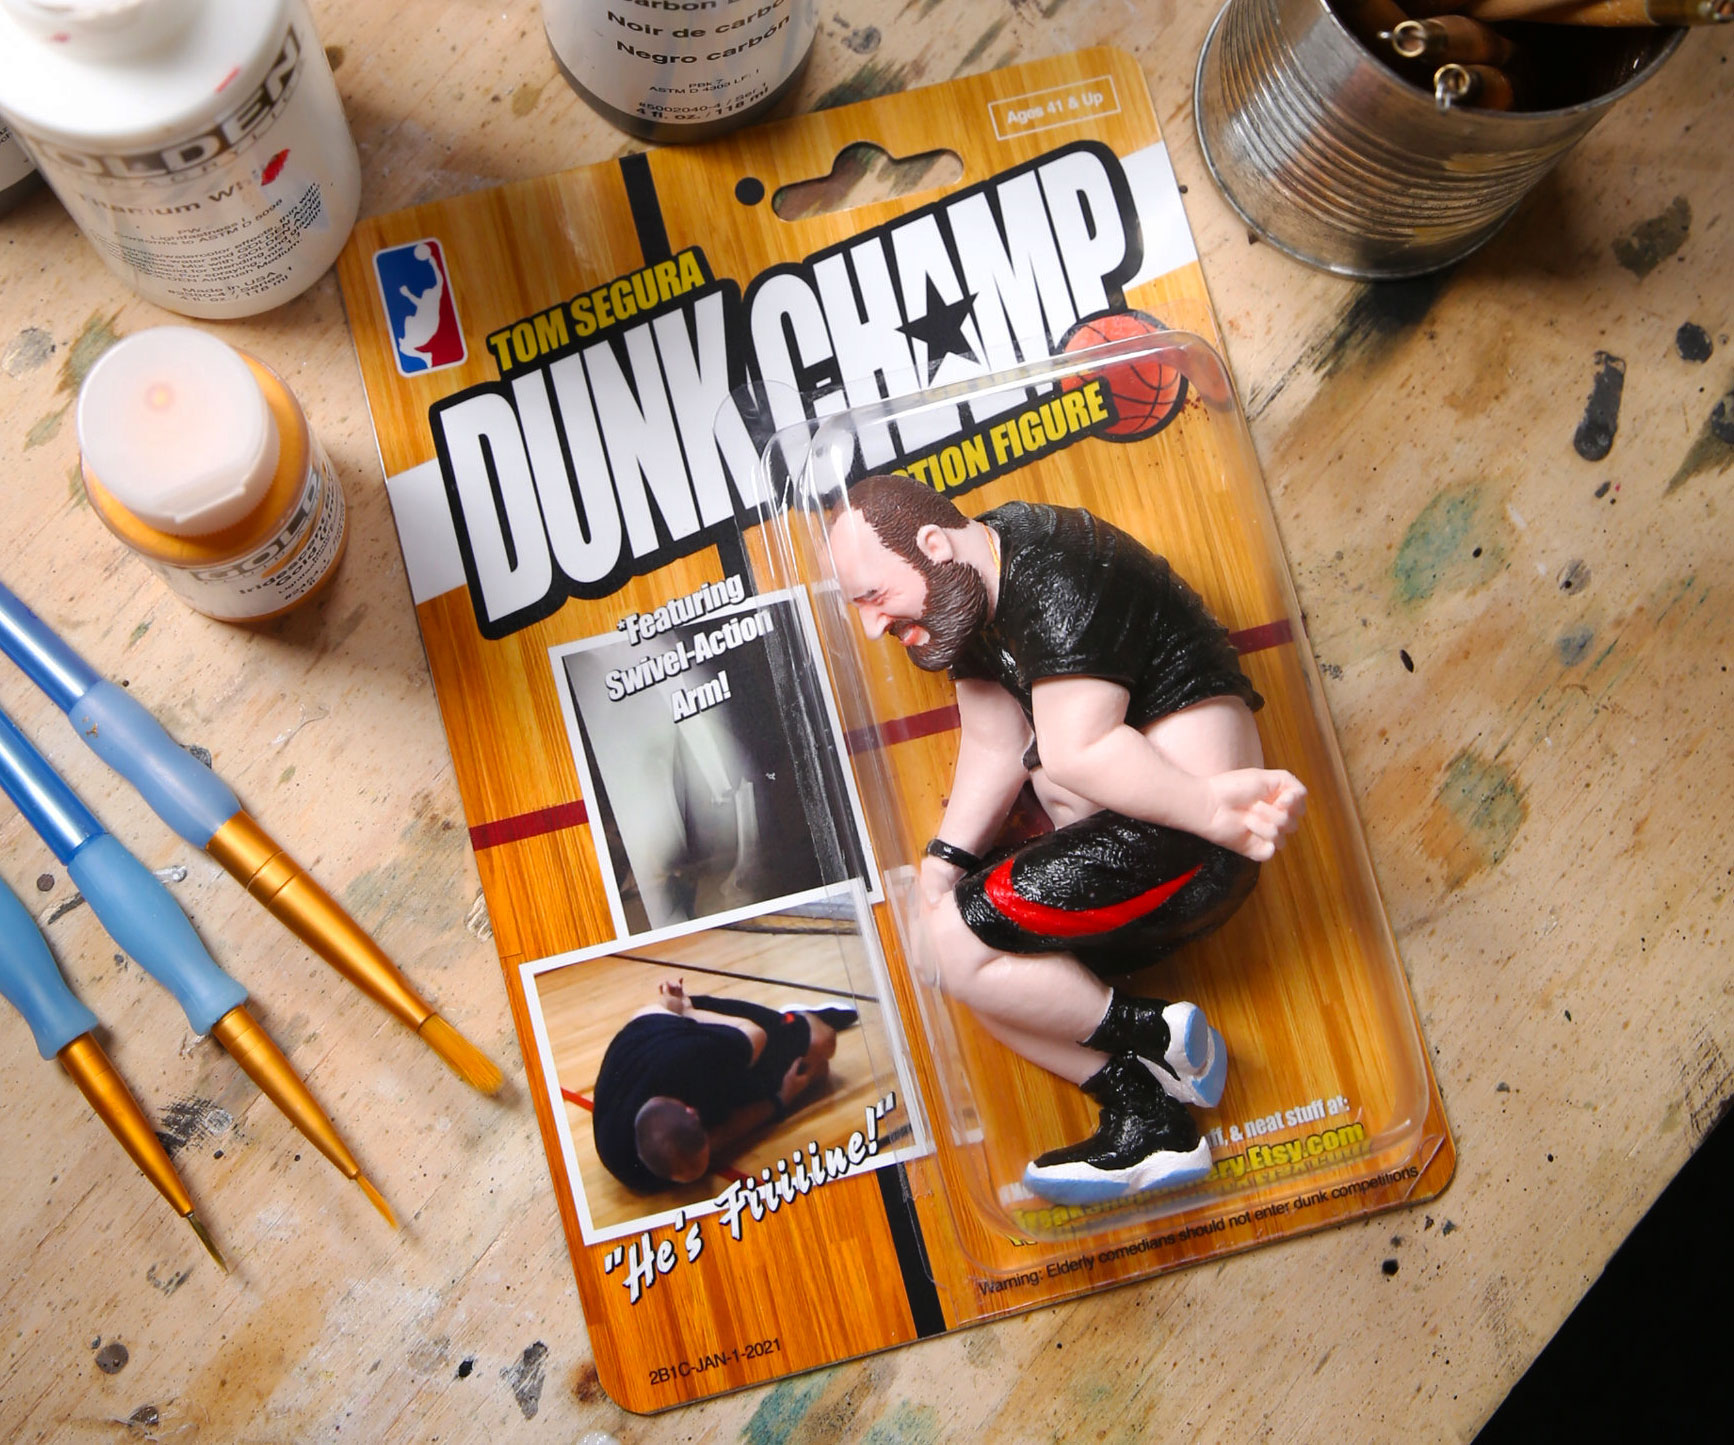 Tom Segura Dunk-Champ Action Figure